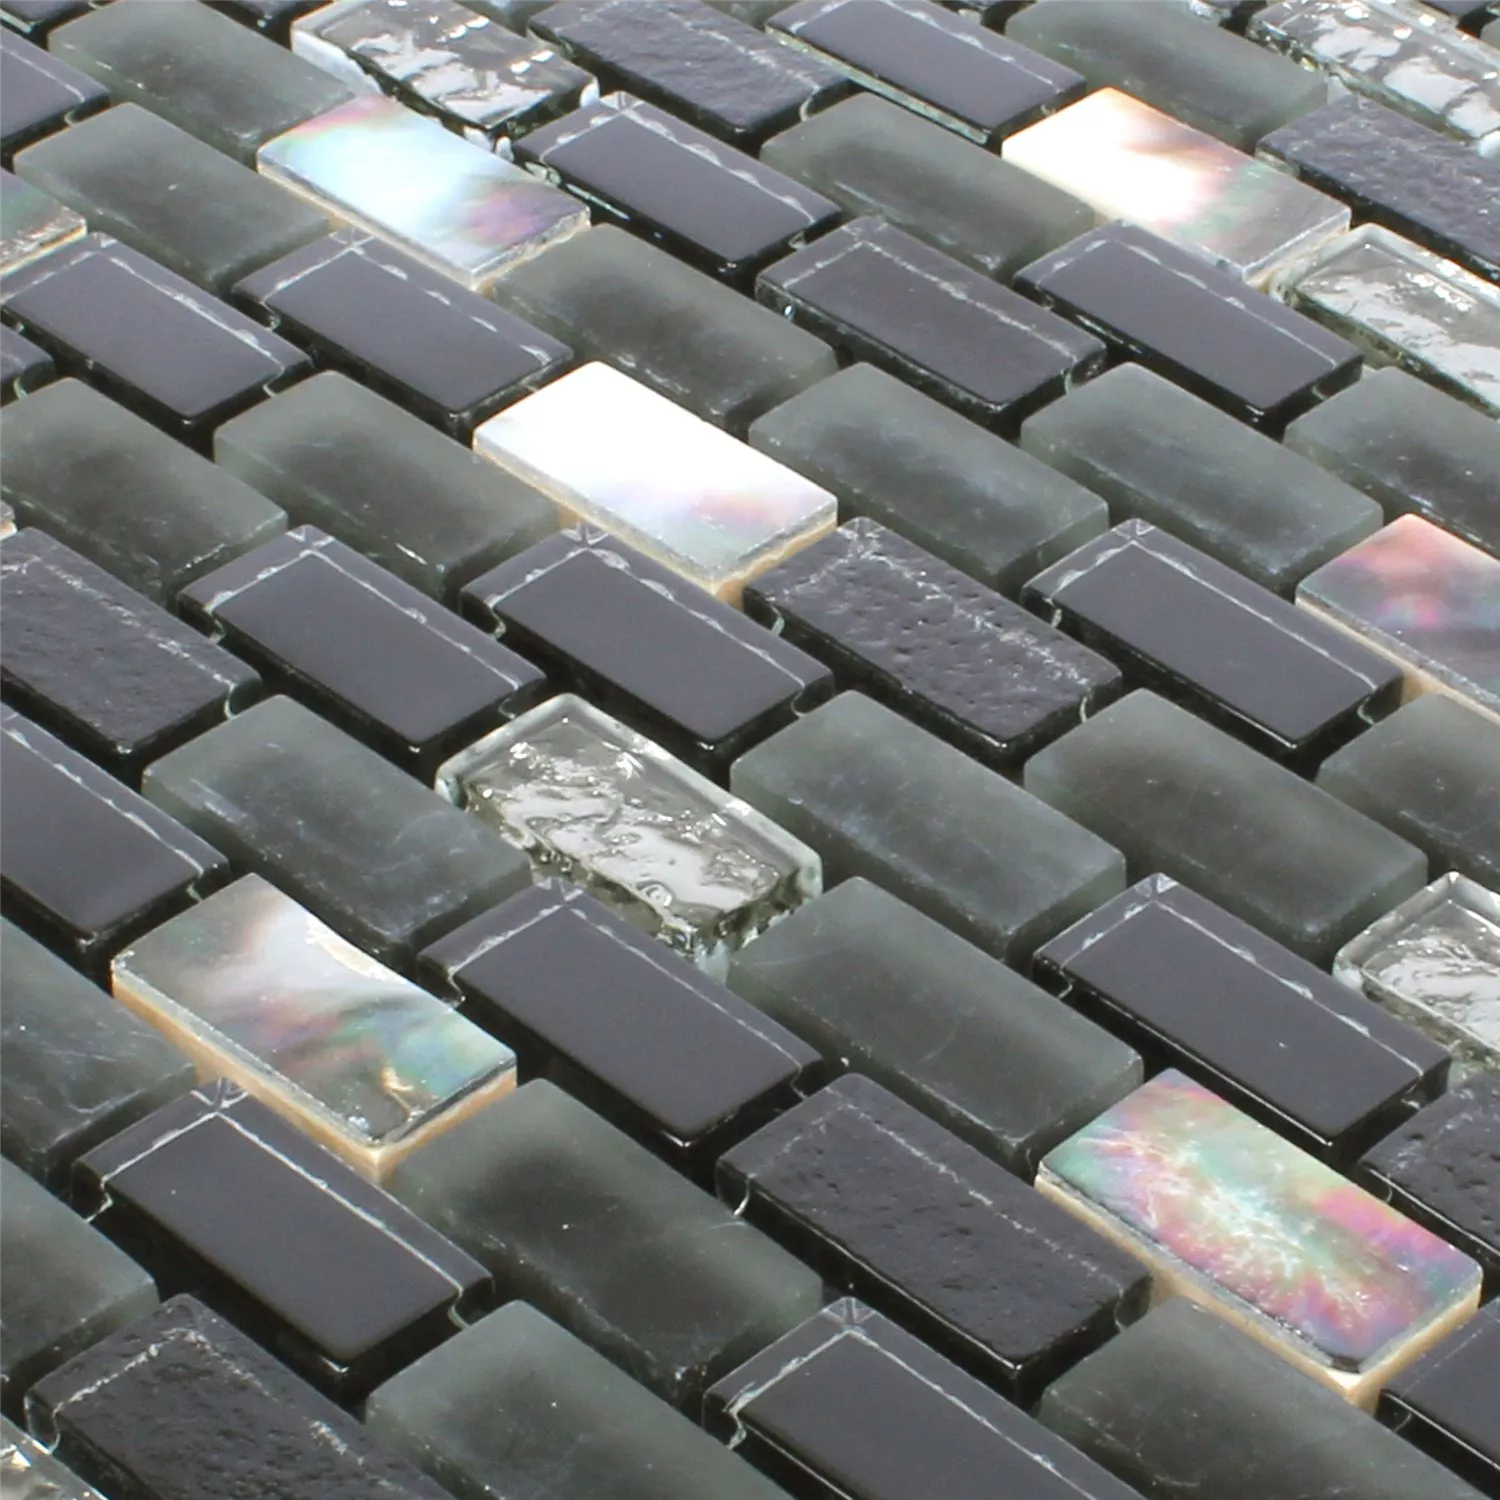 Mosaic Tiles Gondomar Glass Shell Mix Black